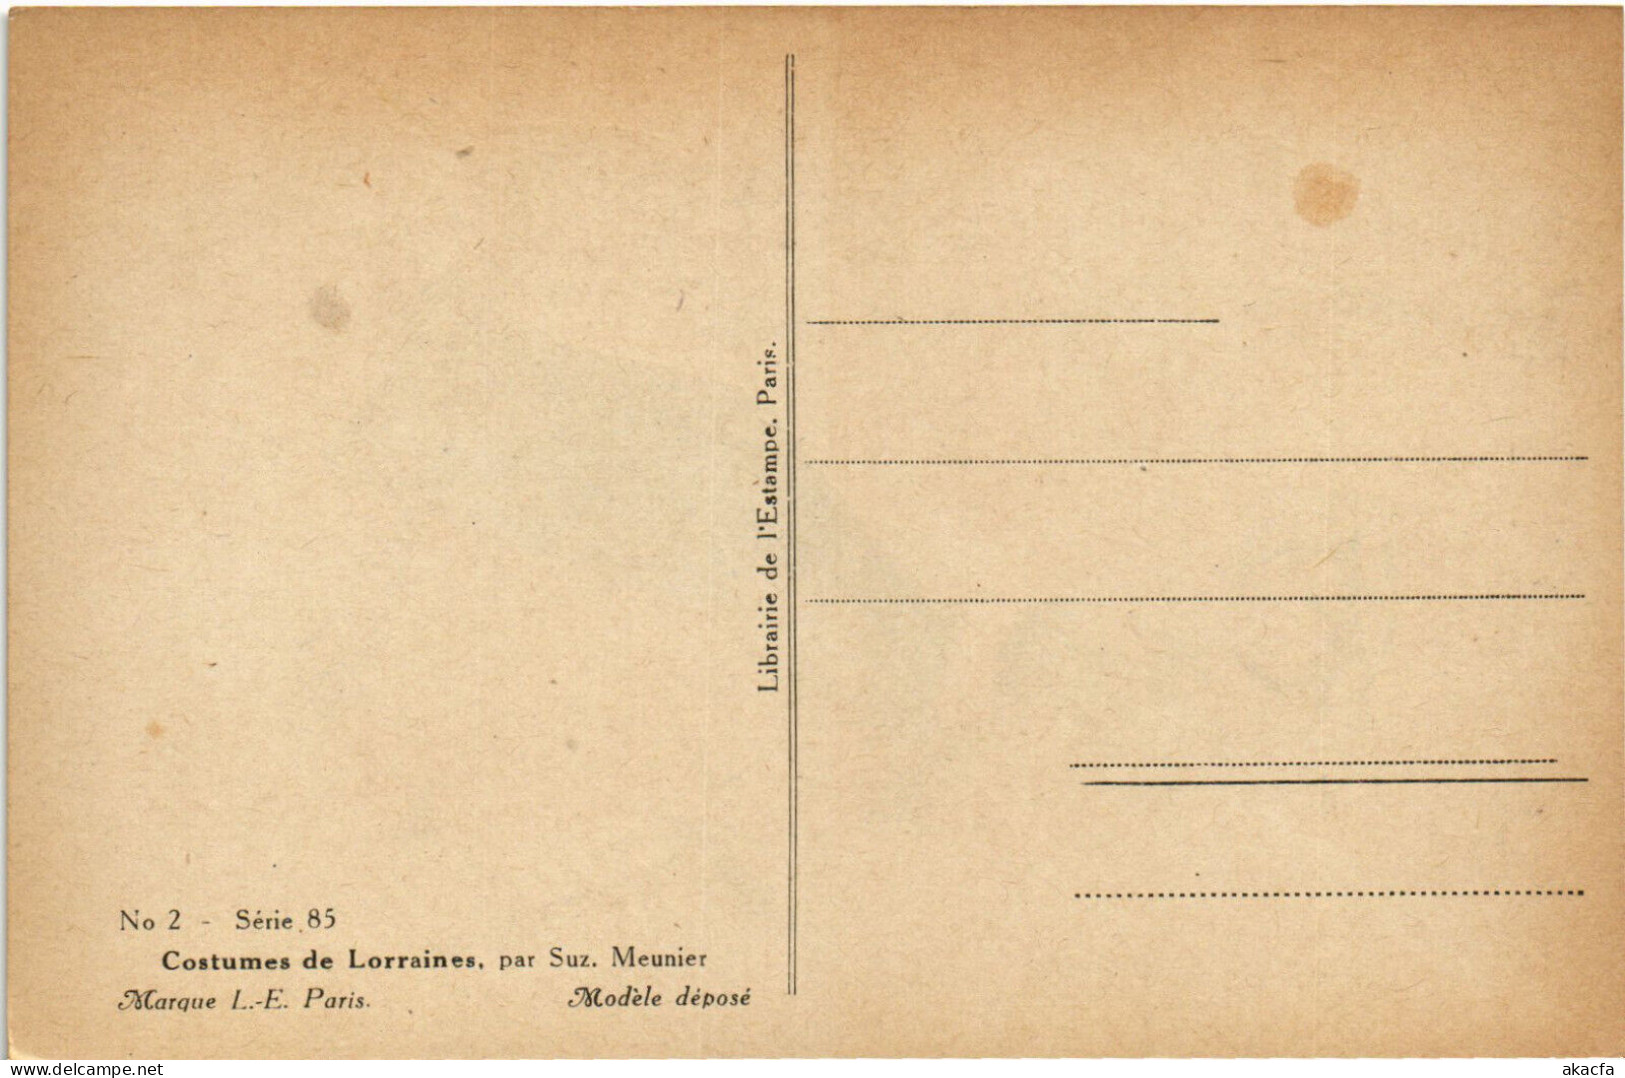 PC ARTIST SIGNED, MEUNIER, COSTUMES DE LORRAINES, Vintage Postcard (b51684) - Meunier, S.